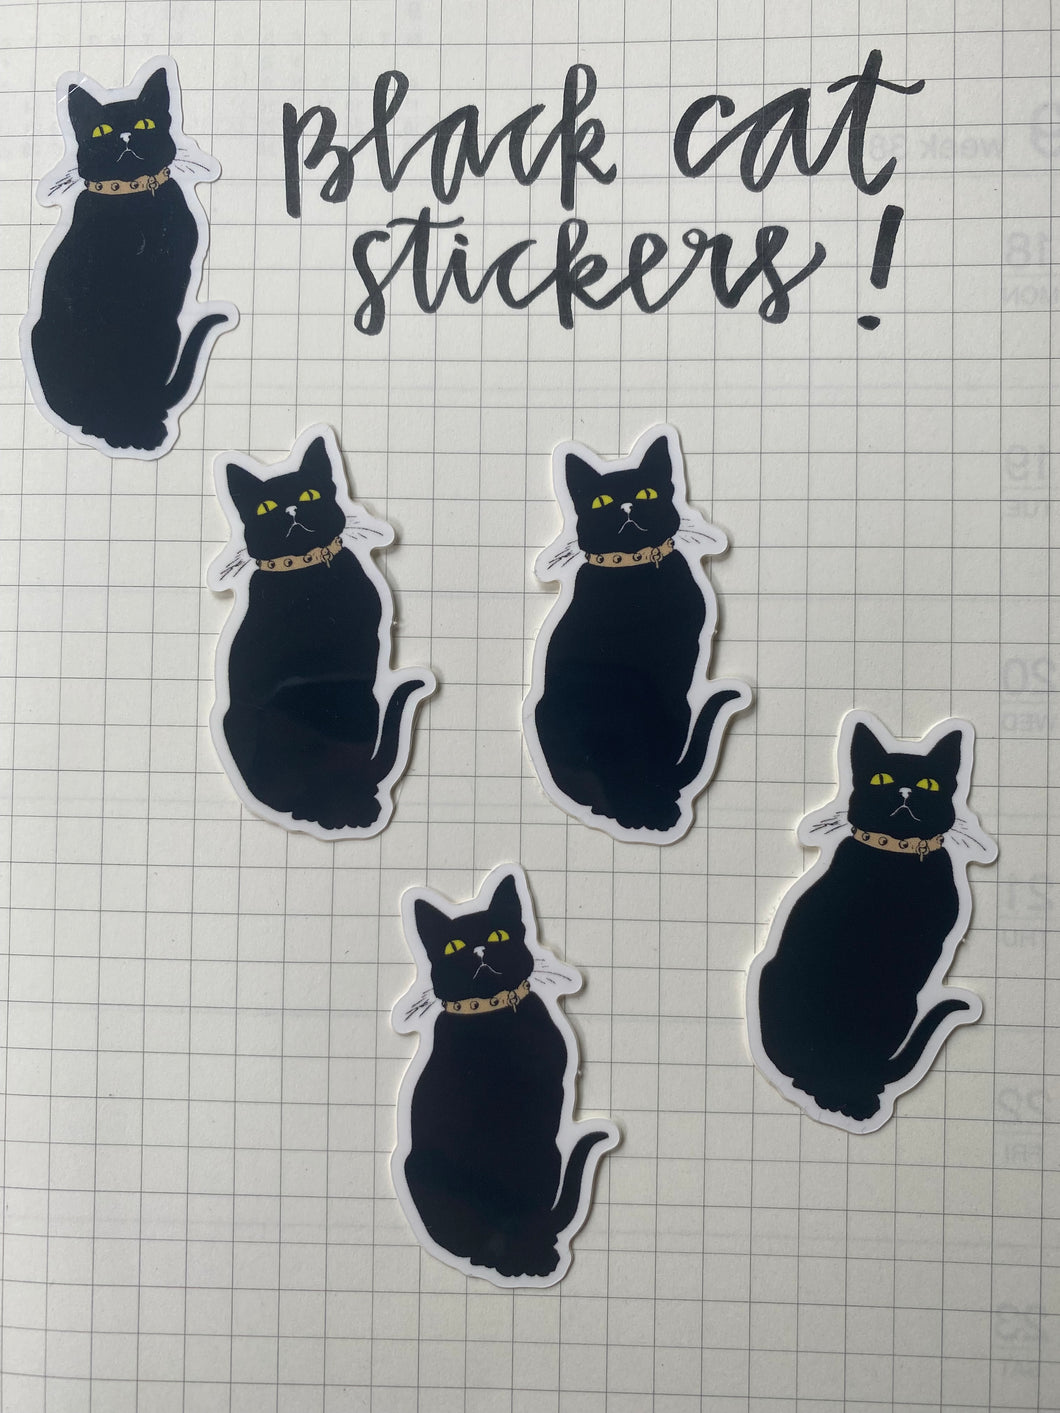 Die cut black cat stickers